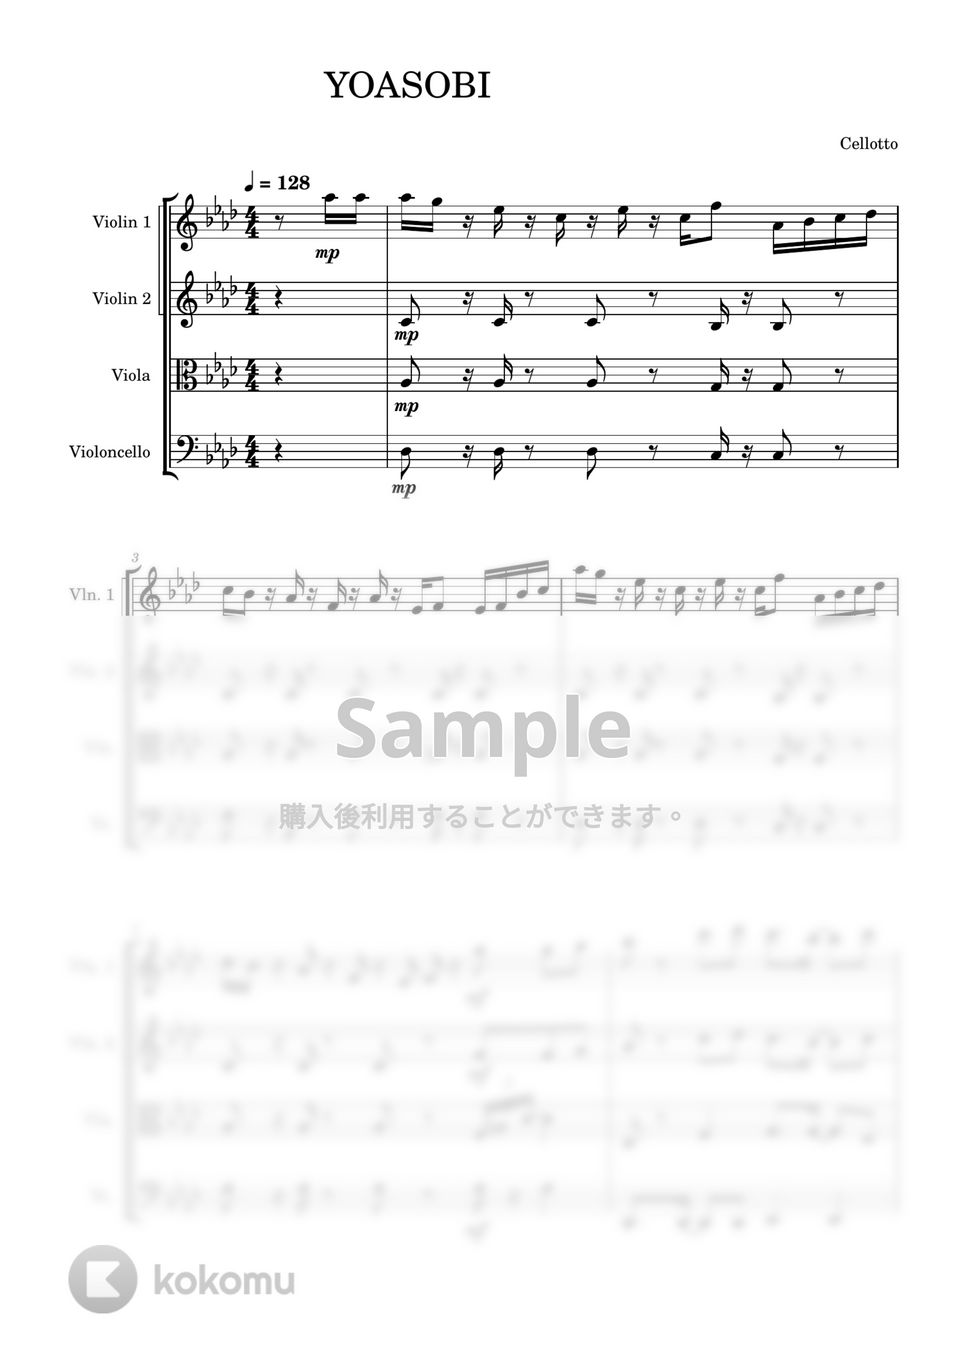 YOASOBI - YOASOBIメドレー (弦楽四重奏) by Cellotto